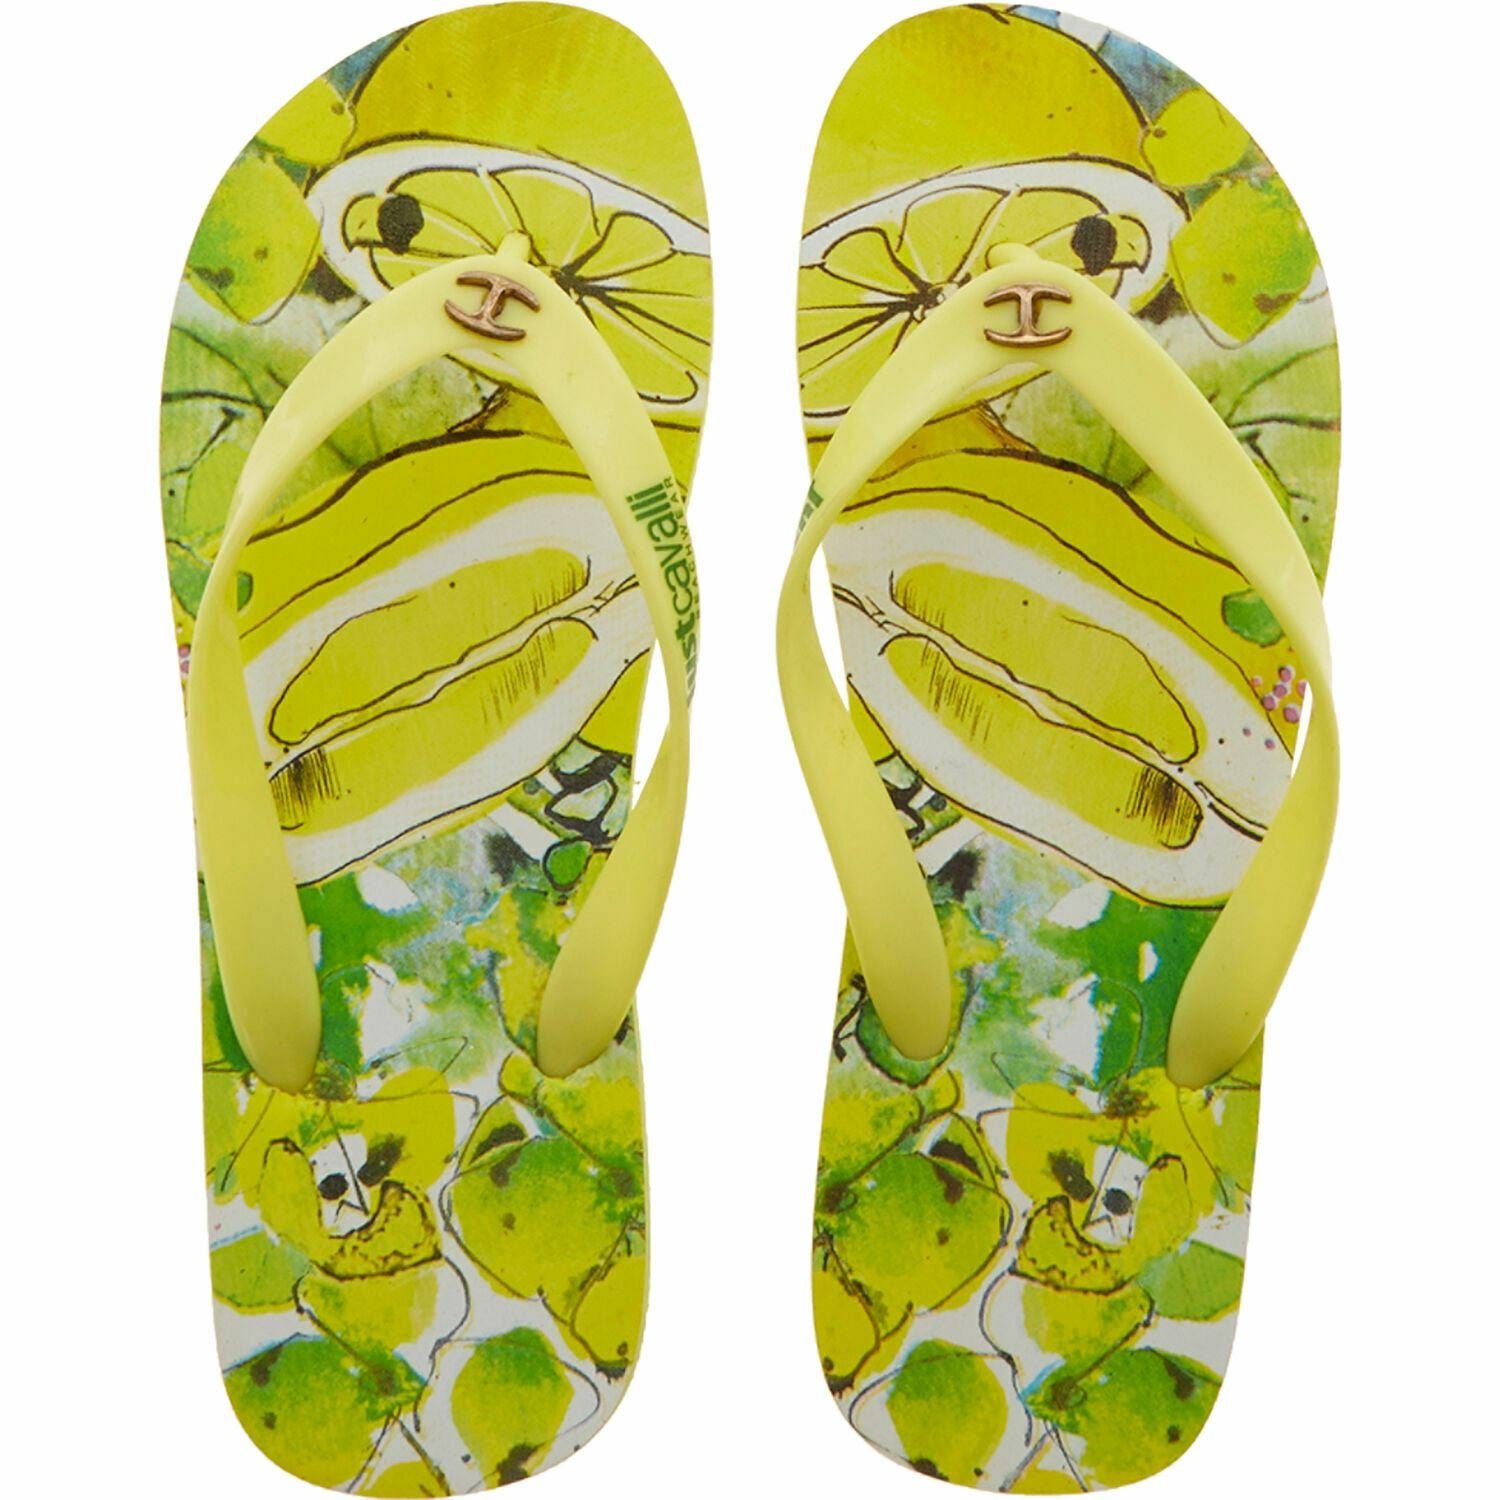 JUST CAVALLI Beachwear: Women's Summer Flip Flops / Sandals, Yellow, size UK 4